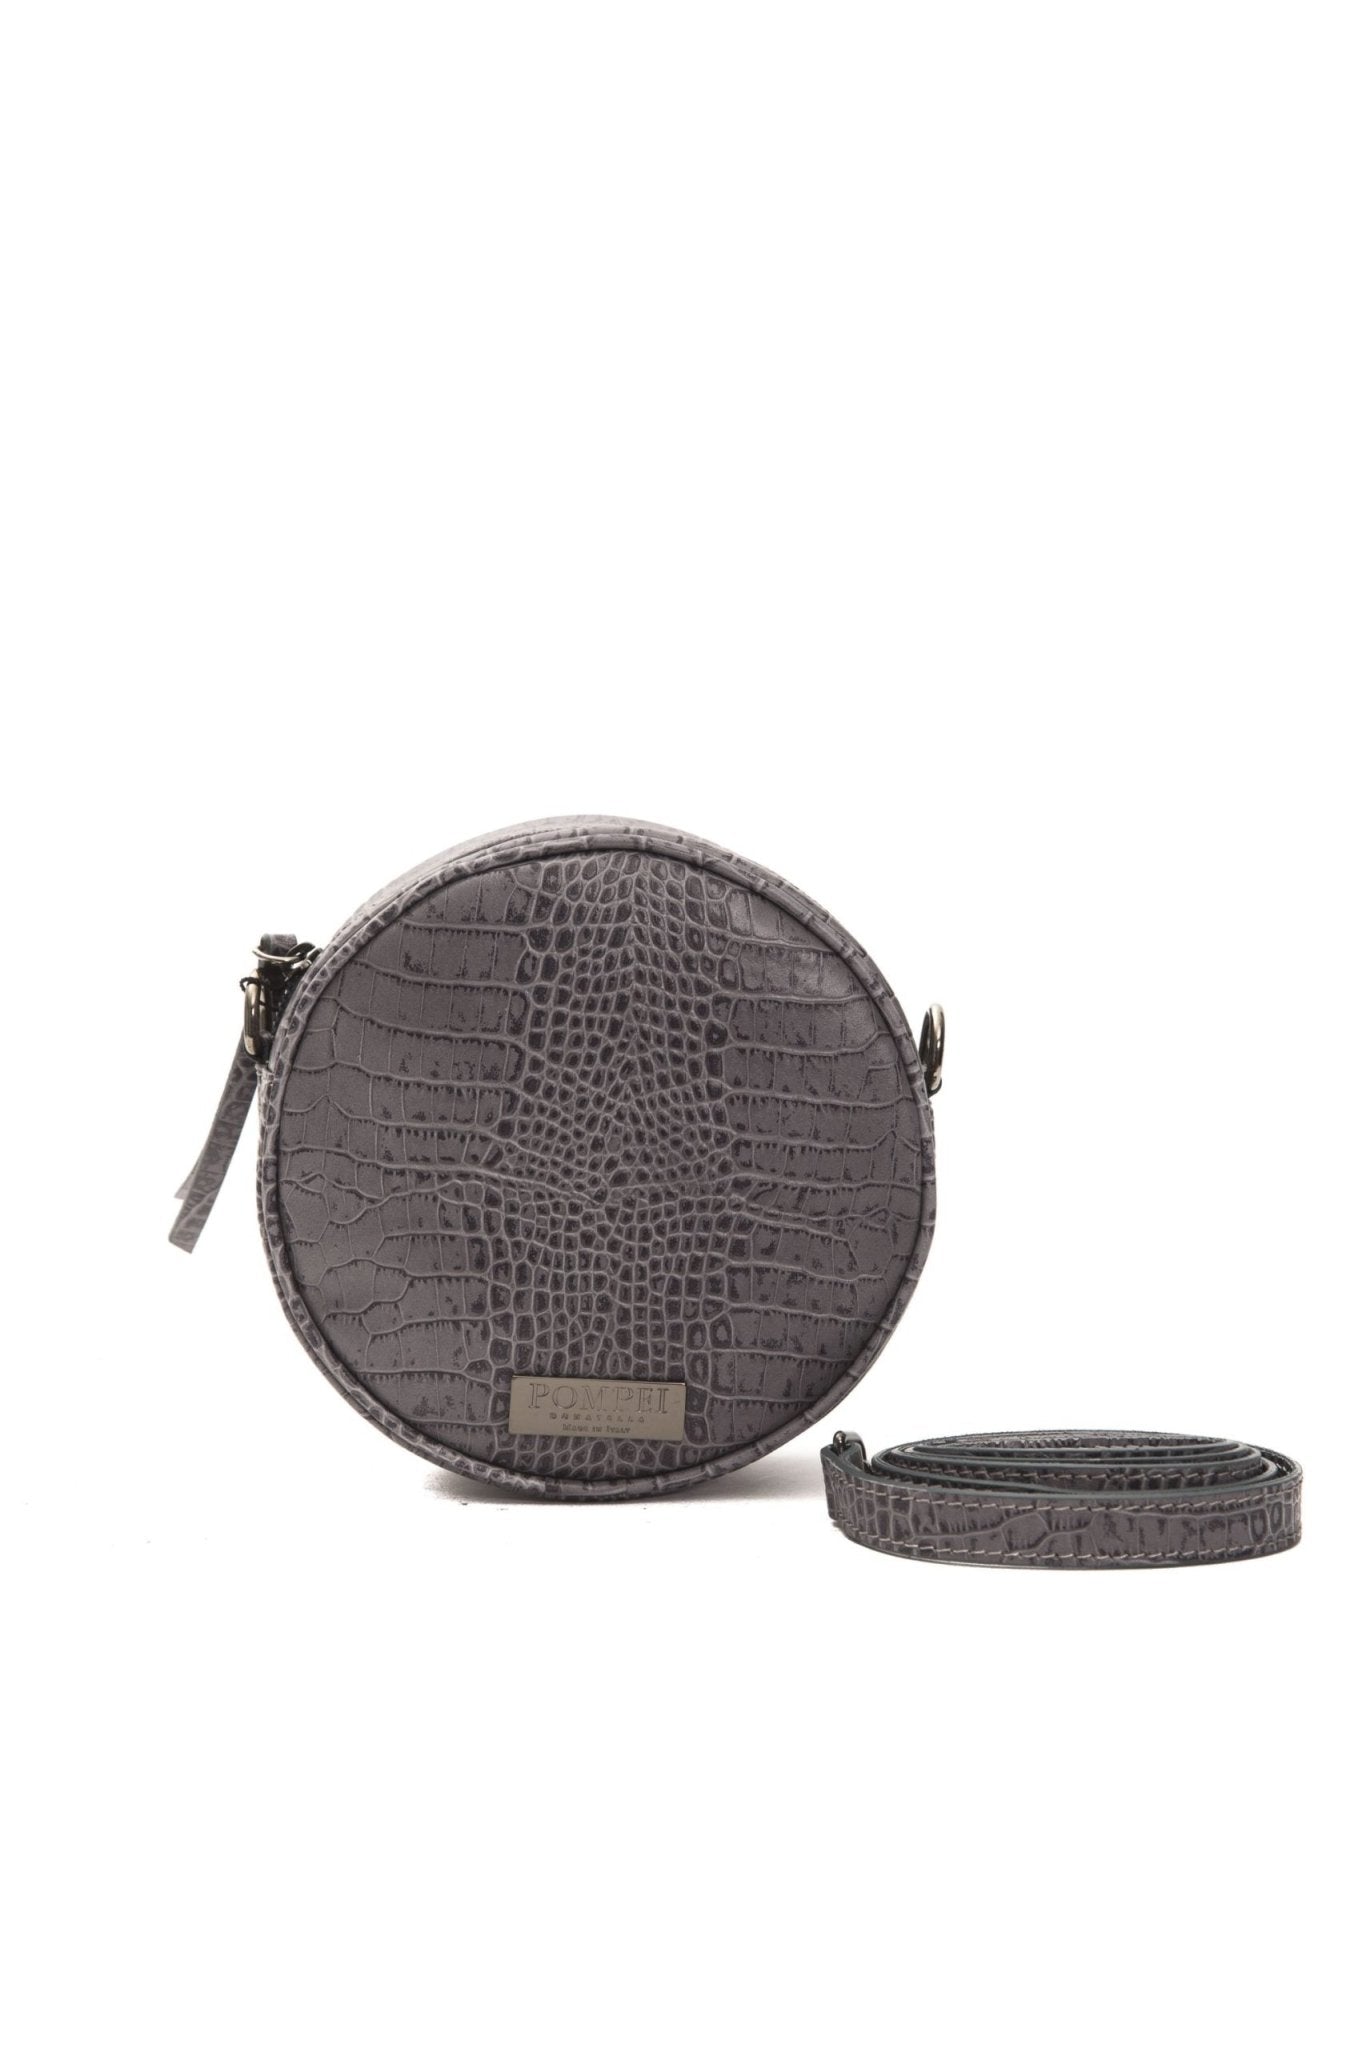 Pompei Donatella Gray Leather Crossbody Bag - Fizigo